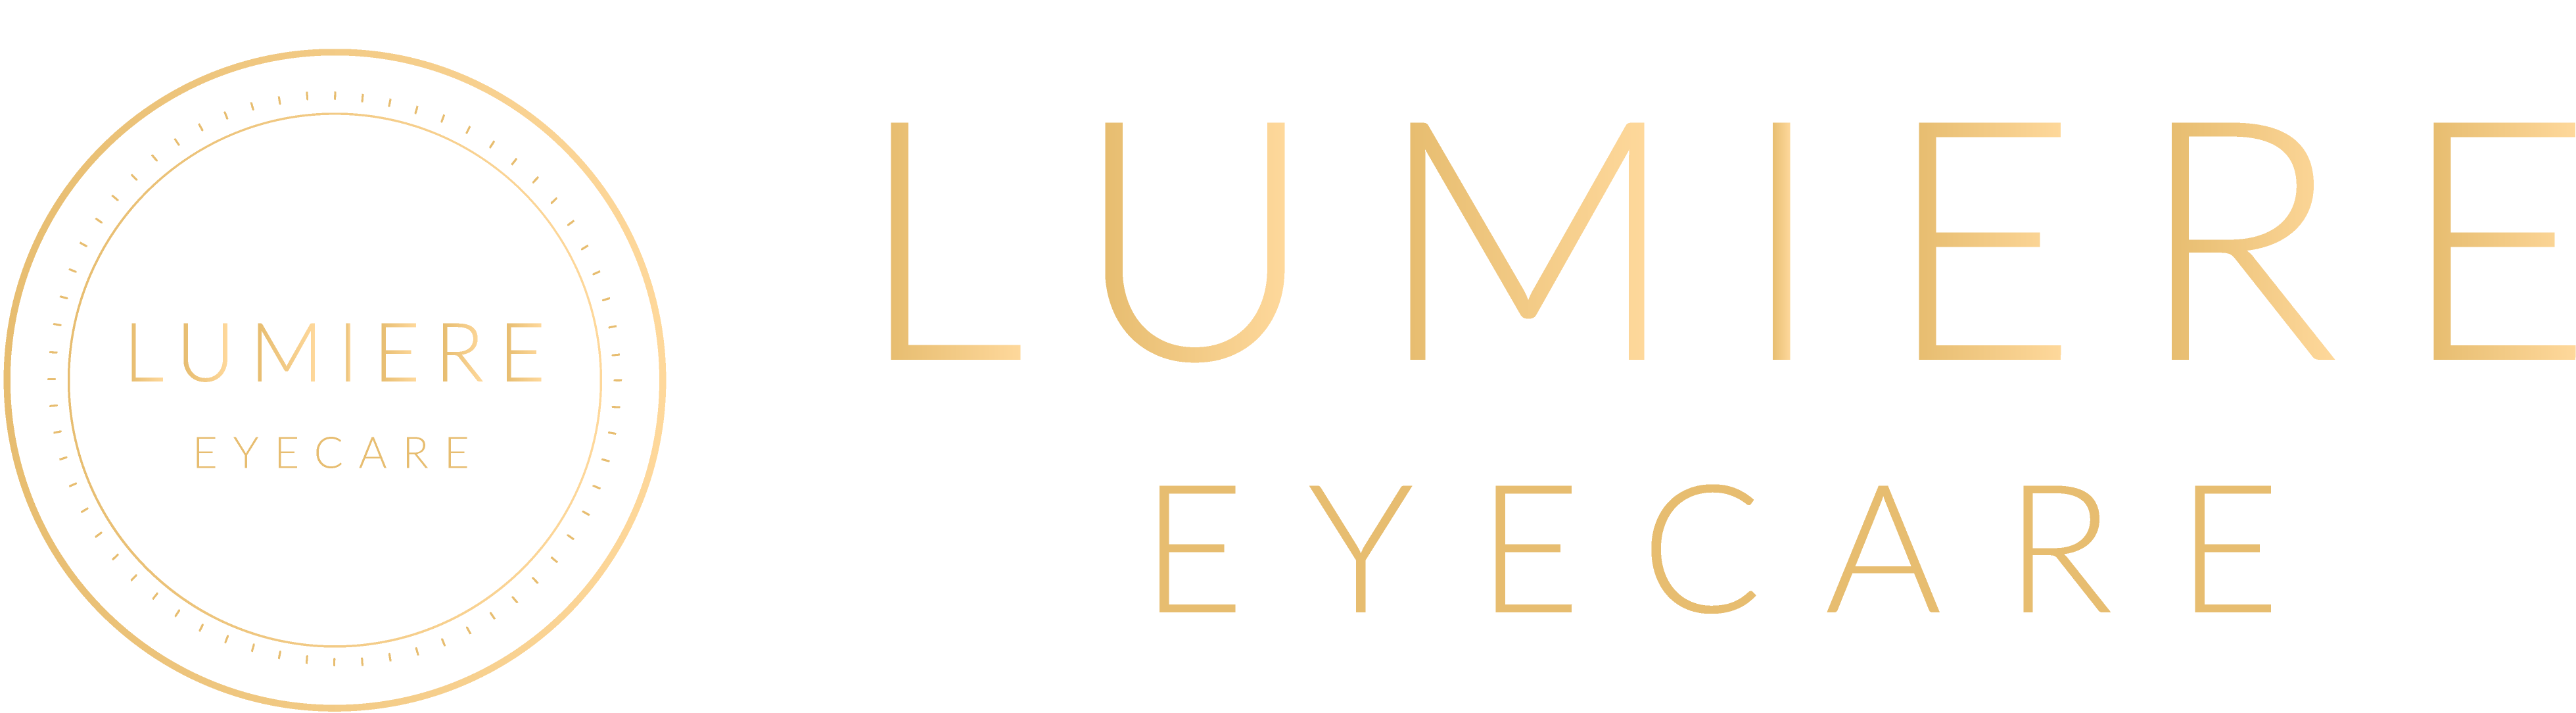 Lumiere Eyecare